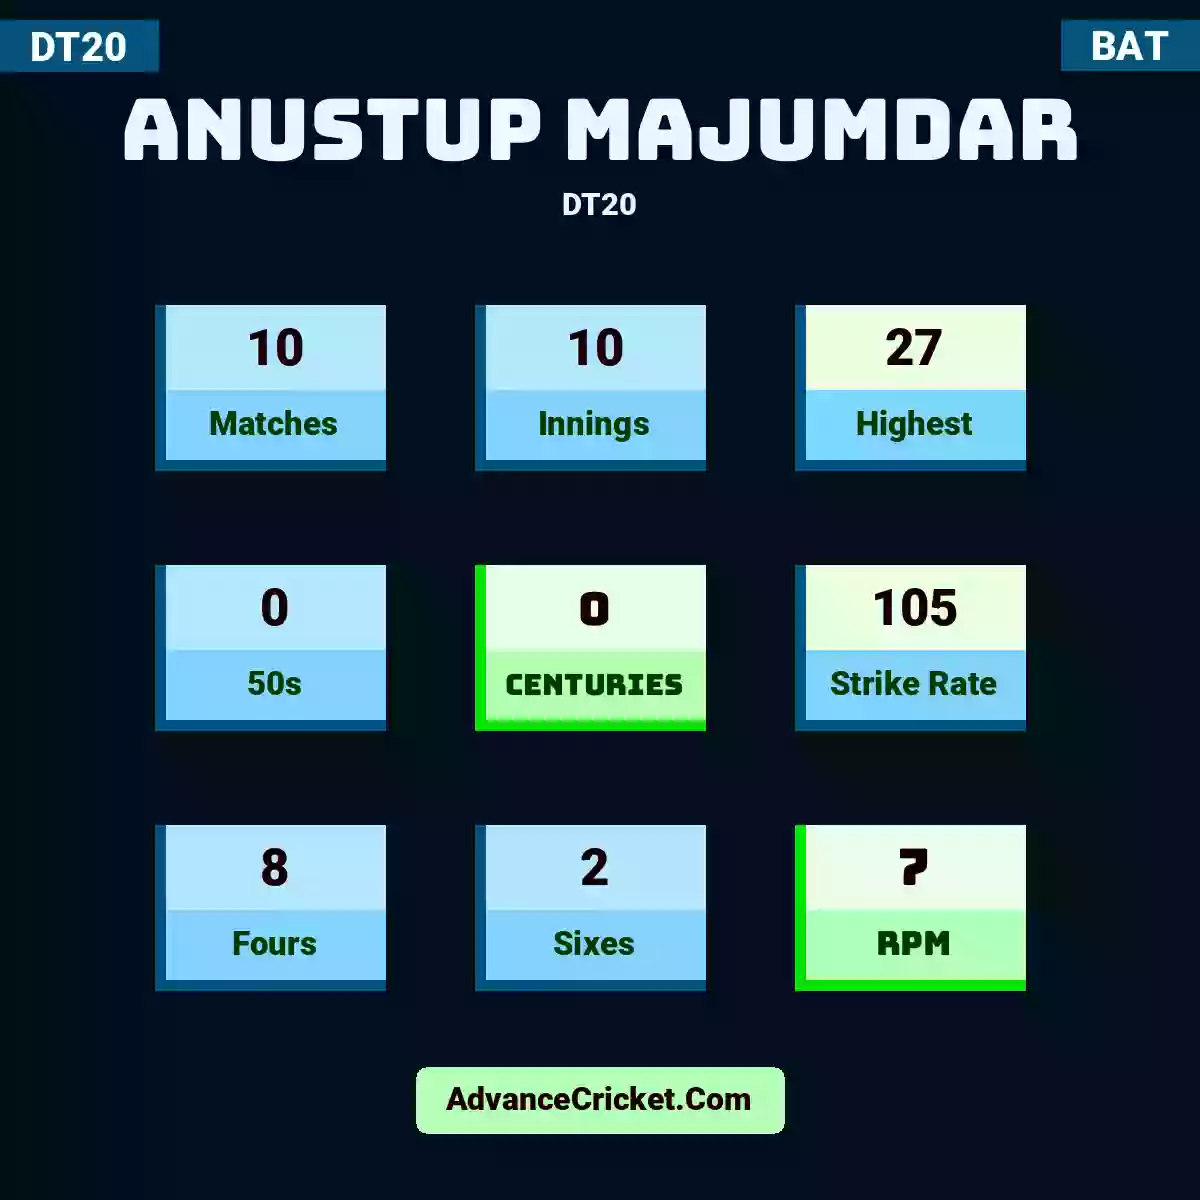 Anustup Majumdar DT20 , Anustup Majumdar played 10 matches, scored 27 runs as highest, 0 half-centuries, and 0 centuries, with a strike rate of 105. A.Majumdar hit 8 fours and 2 sixes, with an RPM of 7.